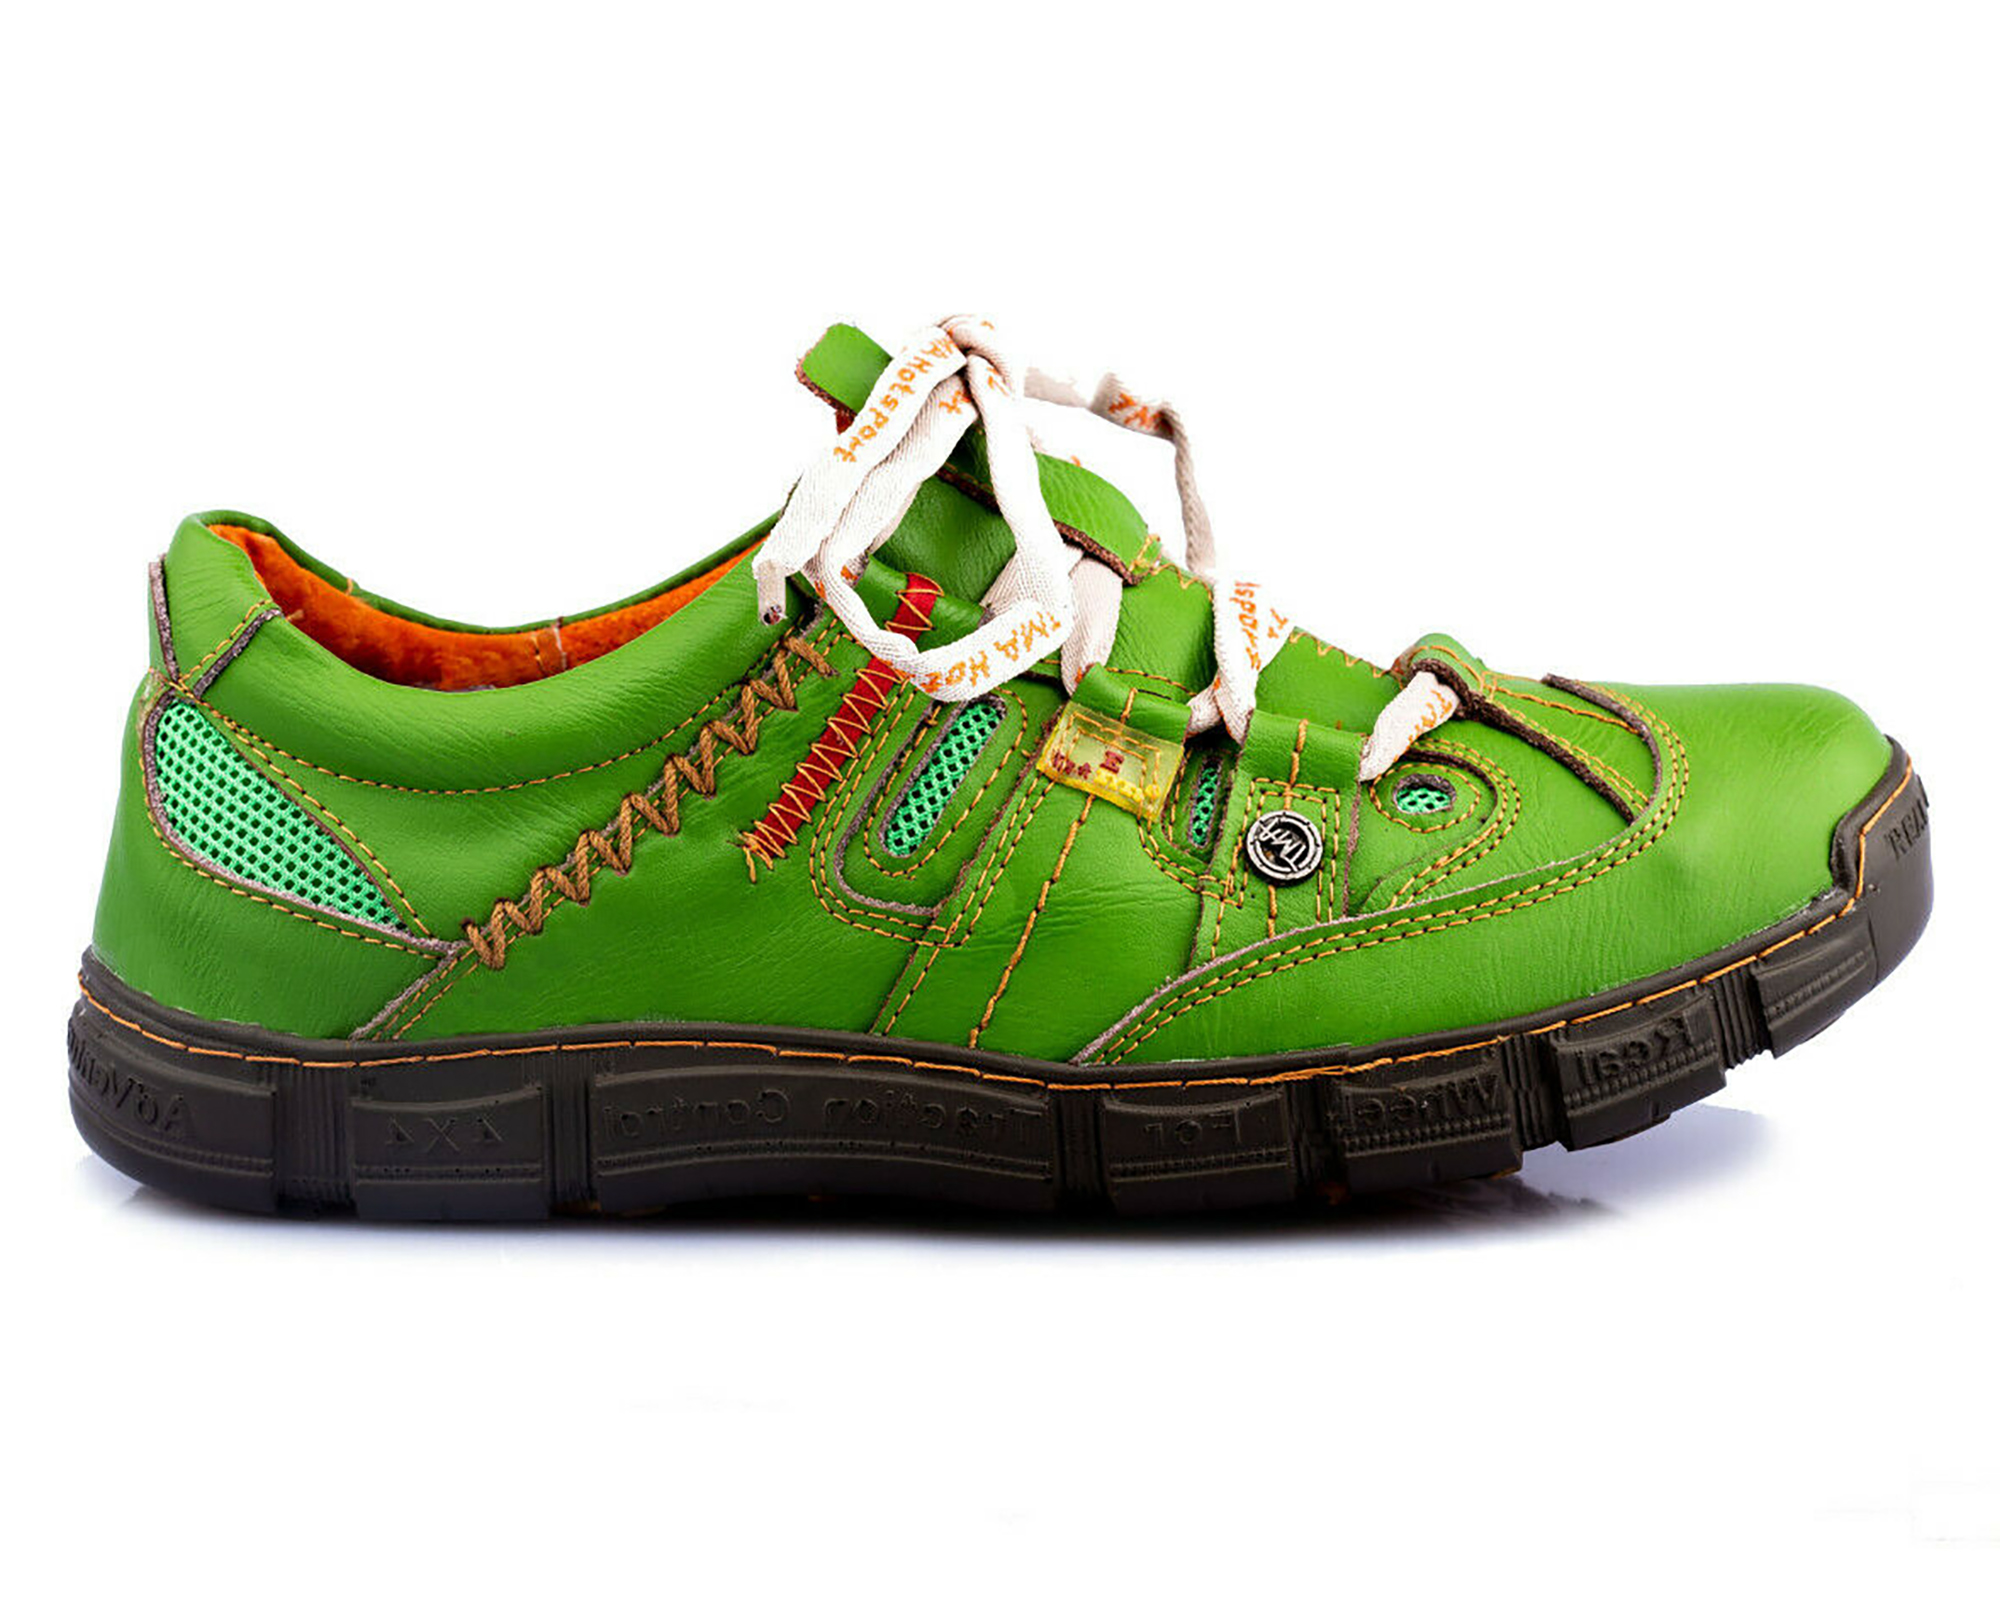 Herrenschuhe | TMA 9957 | Herren Halbschuhe | Sneaker | Echtleder | grün | alle Größen 41 - 46